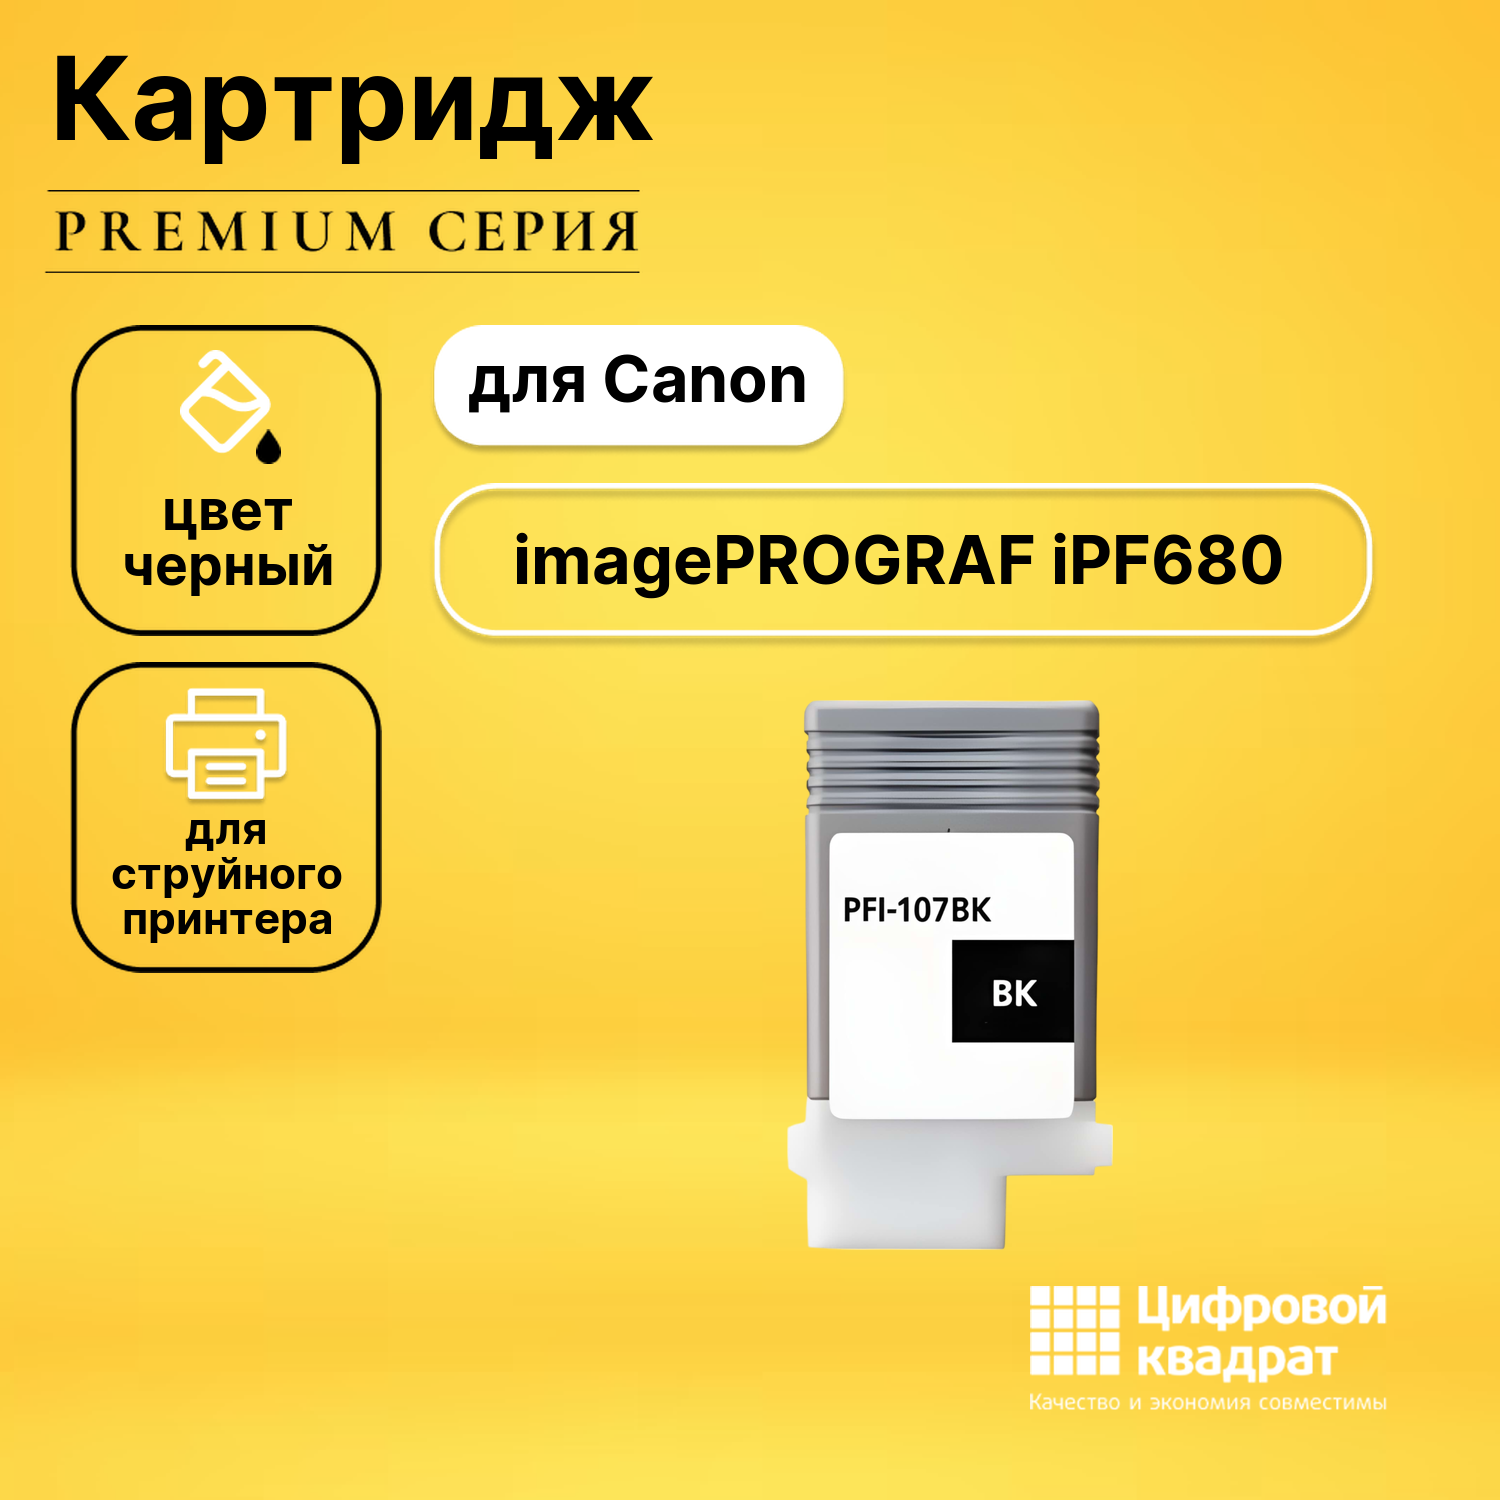 Картридж DS для Canon imagePROGRAF iPF680 совместимый